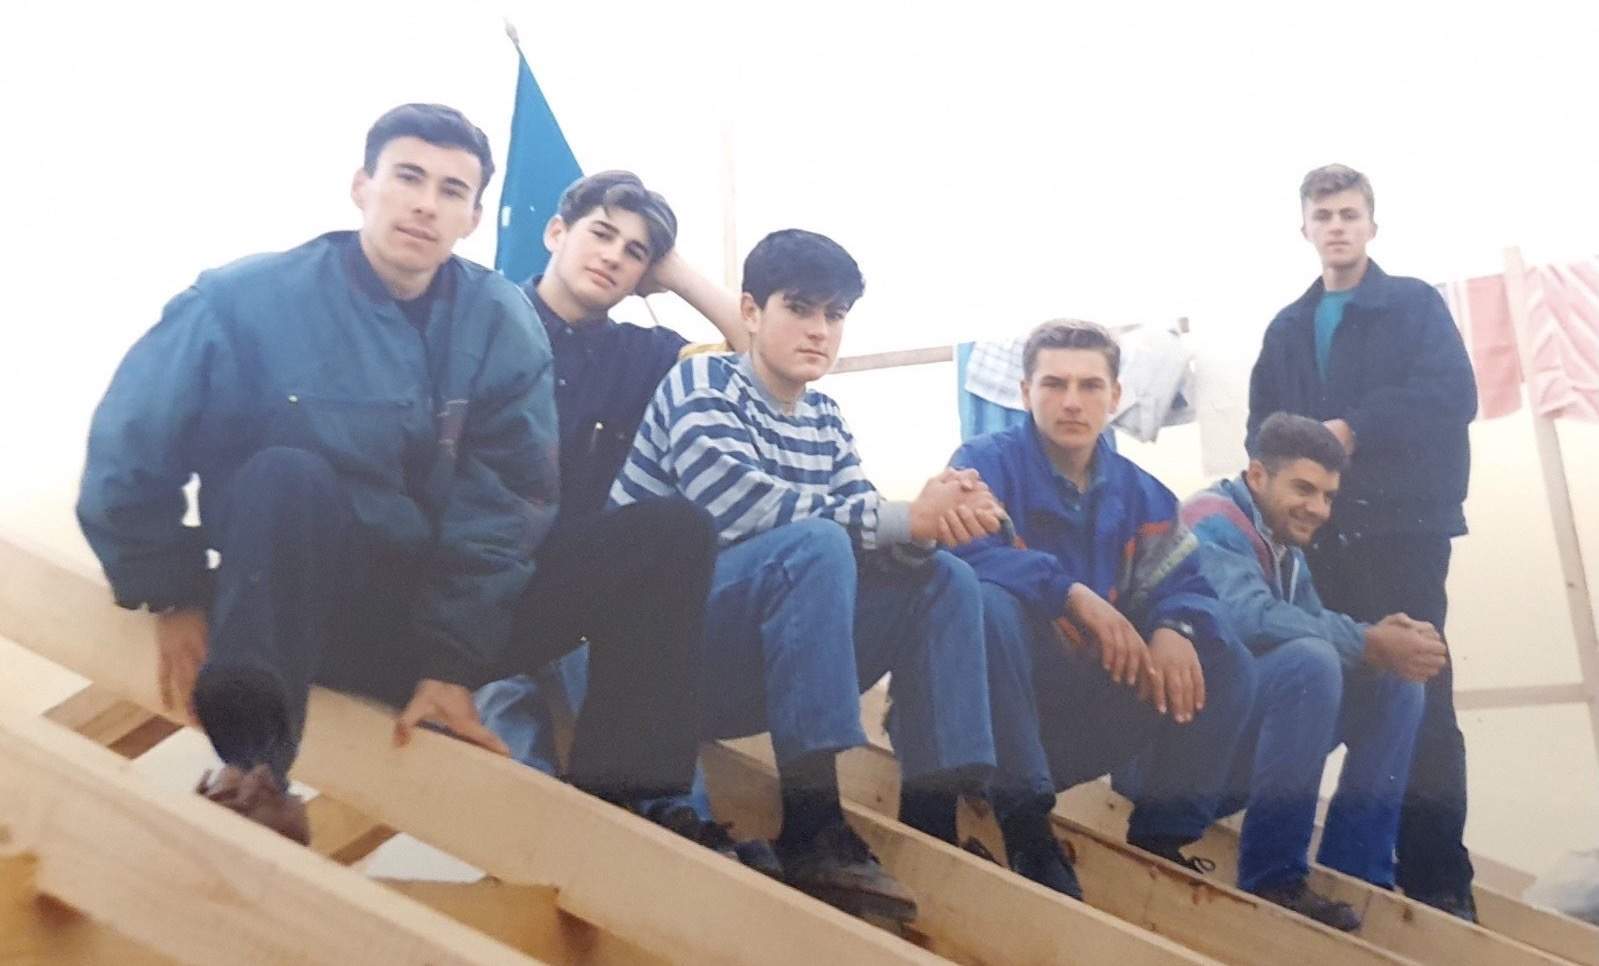 21.10.1995: Haris Mehmedagić, Adnan Muminović, Emir Isović, Nedžad Balta, Almir Zahirović - Hladni i Abdurrahman Zukan